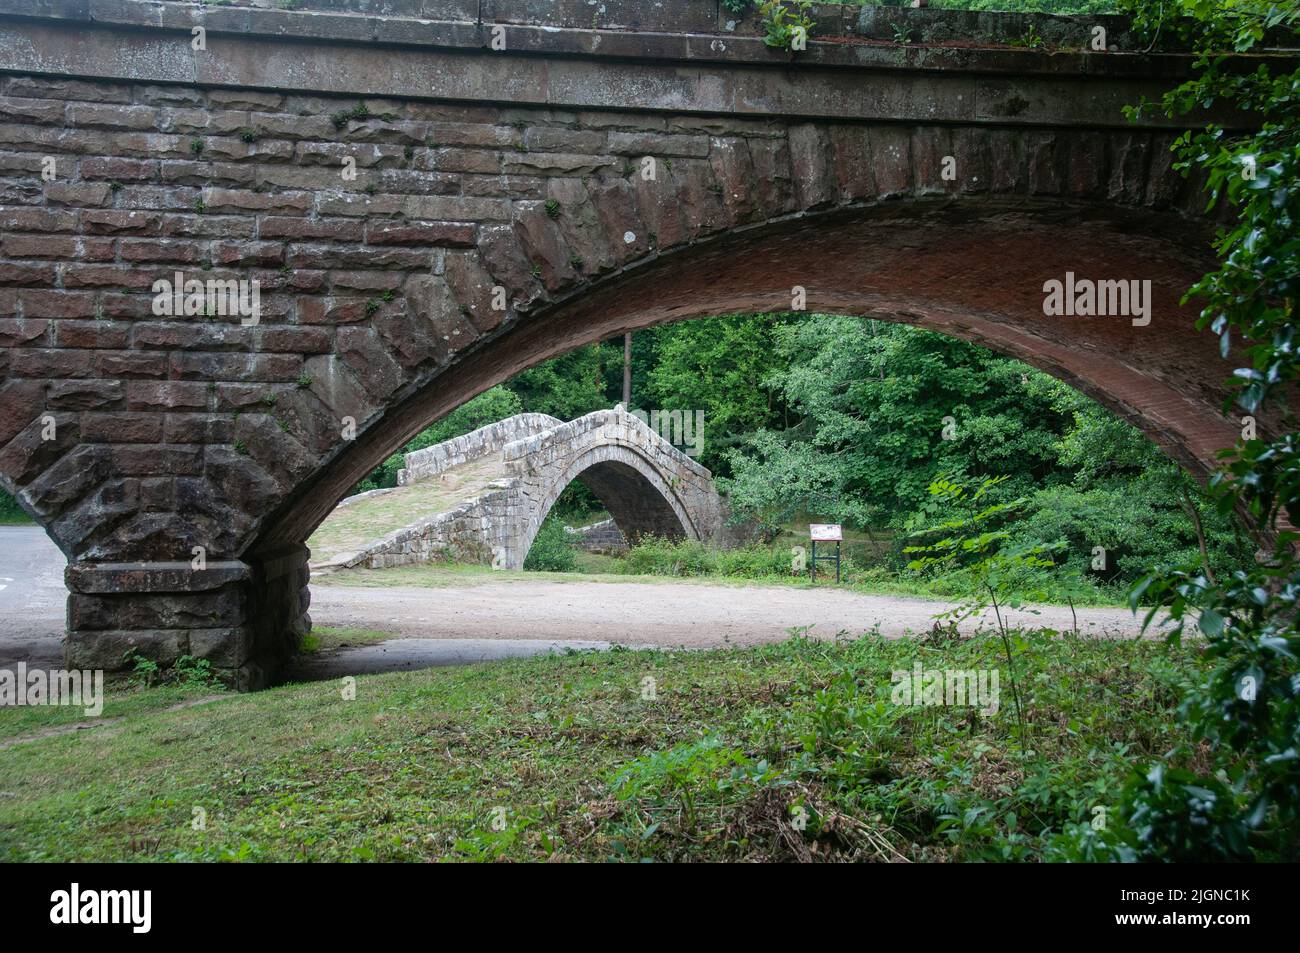 Around the UK - Beggars Bridge, Glaisdale, near Whitby, North Yorkshire, UK (viewed through the nearby Railway Bridge) Stock Photo